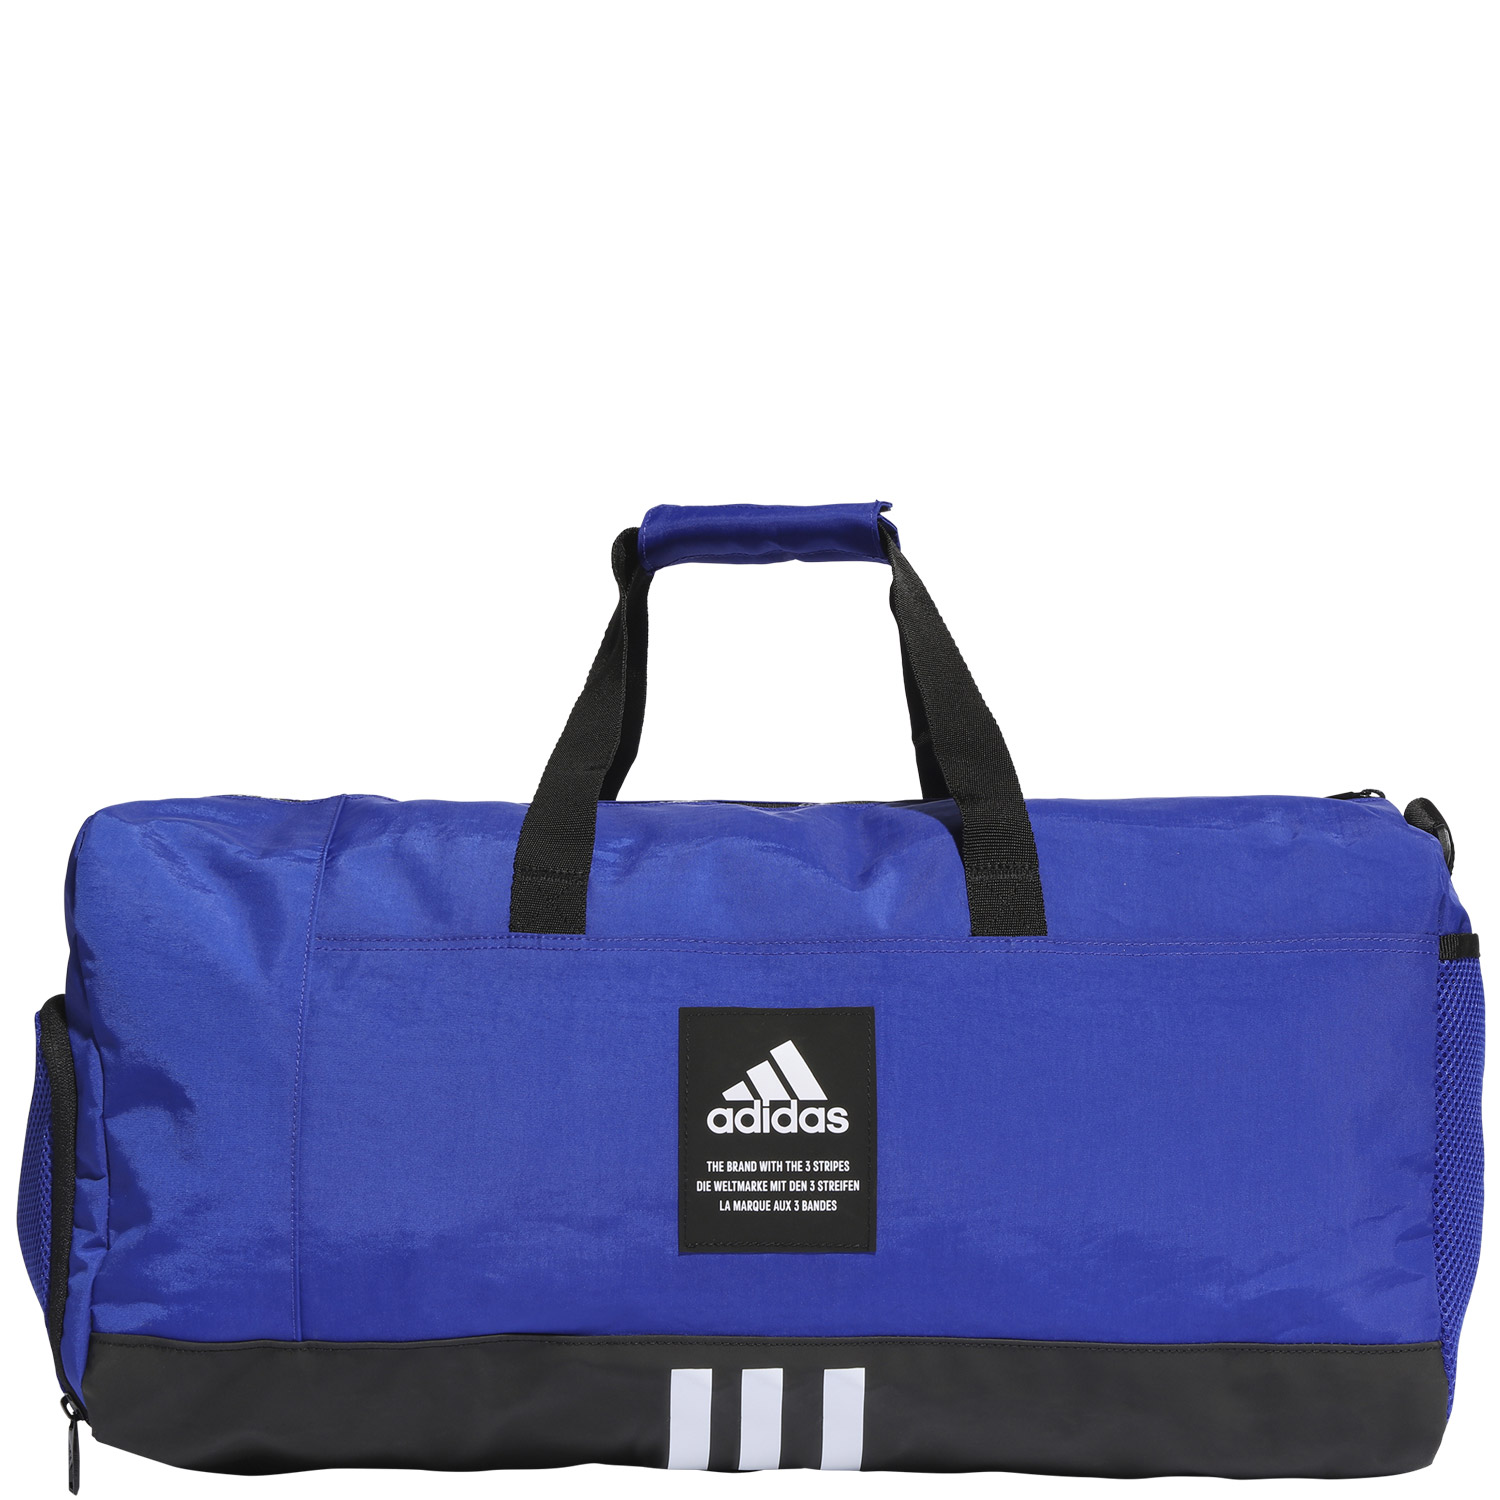 adidas Performance Duffelbag M 4 Athletes blue/black